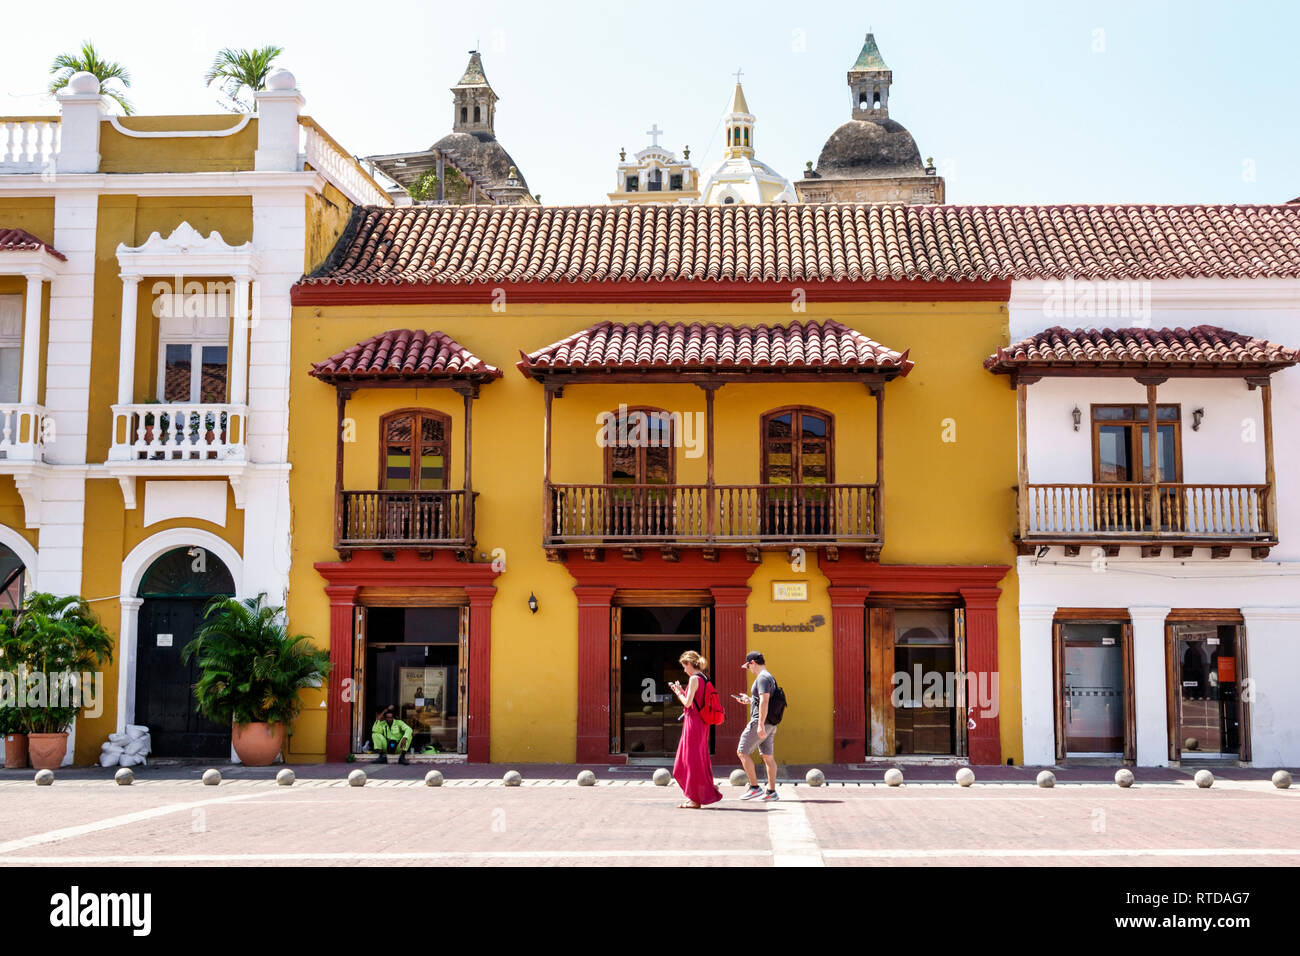 Cartagena Colombia,Plaza de La Aduana,public square,colonial architecture,red tile roof,wood balcony,couple,exploring,COL190119106 Stock Photo